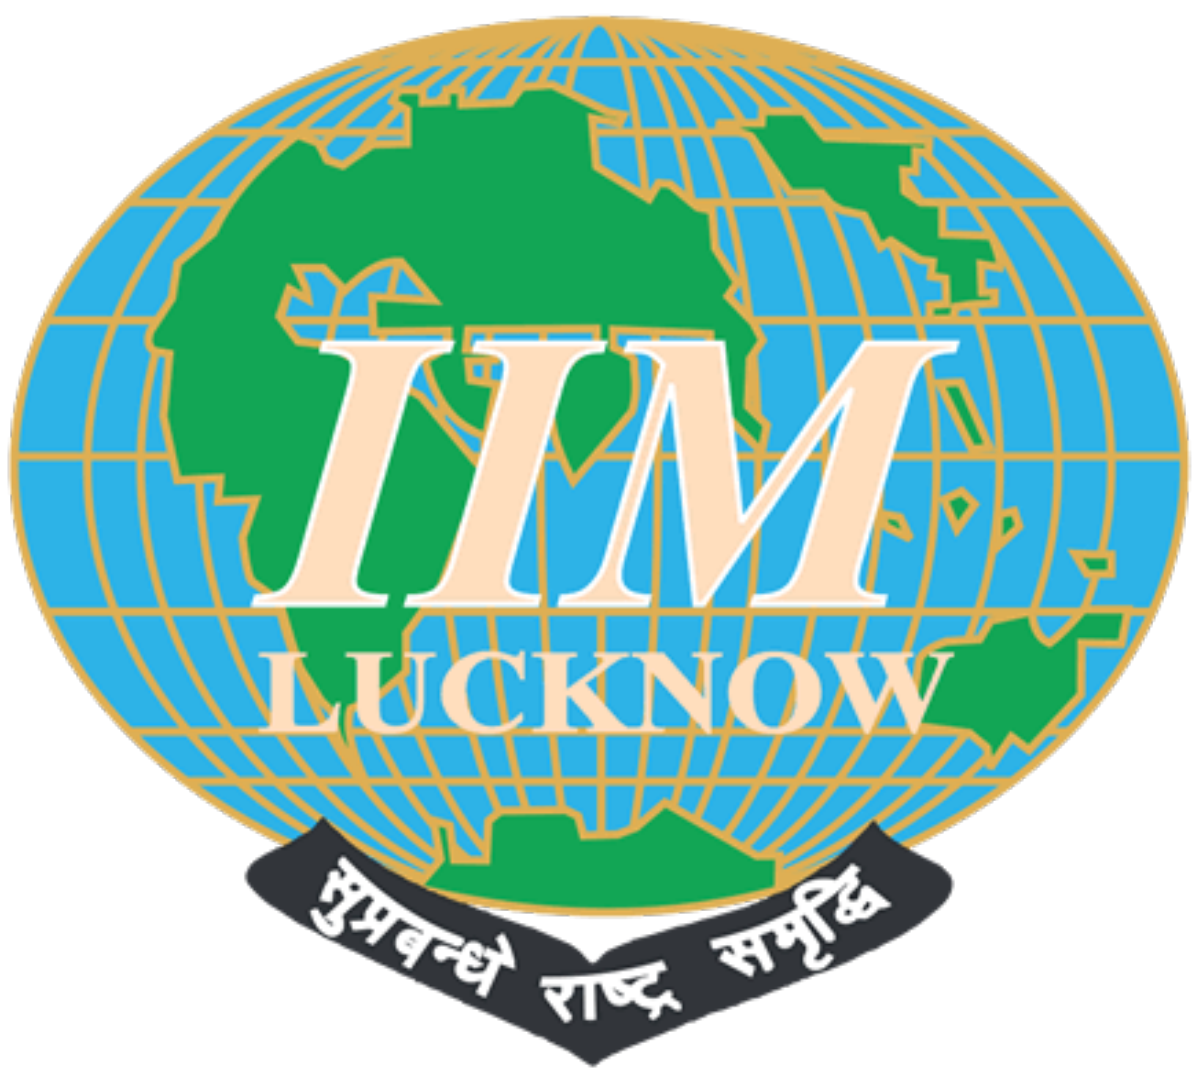 IIM Lucknow: Indian Institute of Management Lucknow